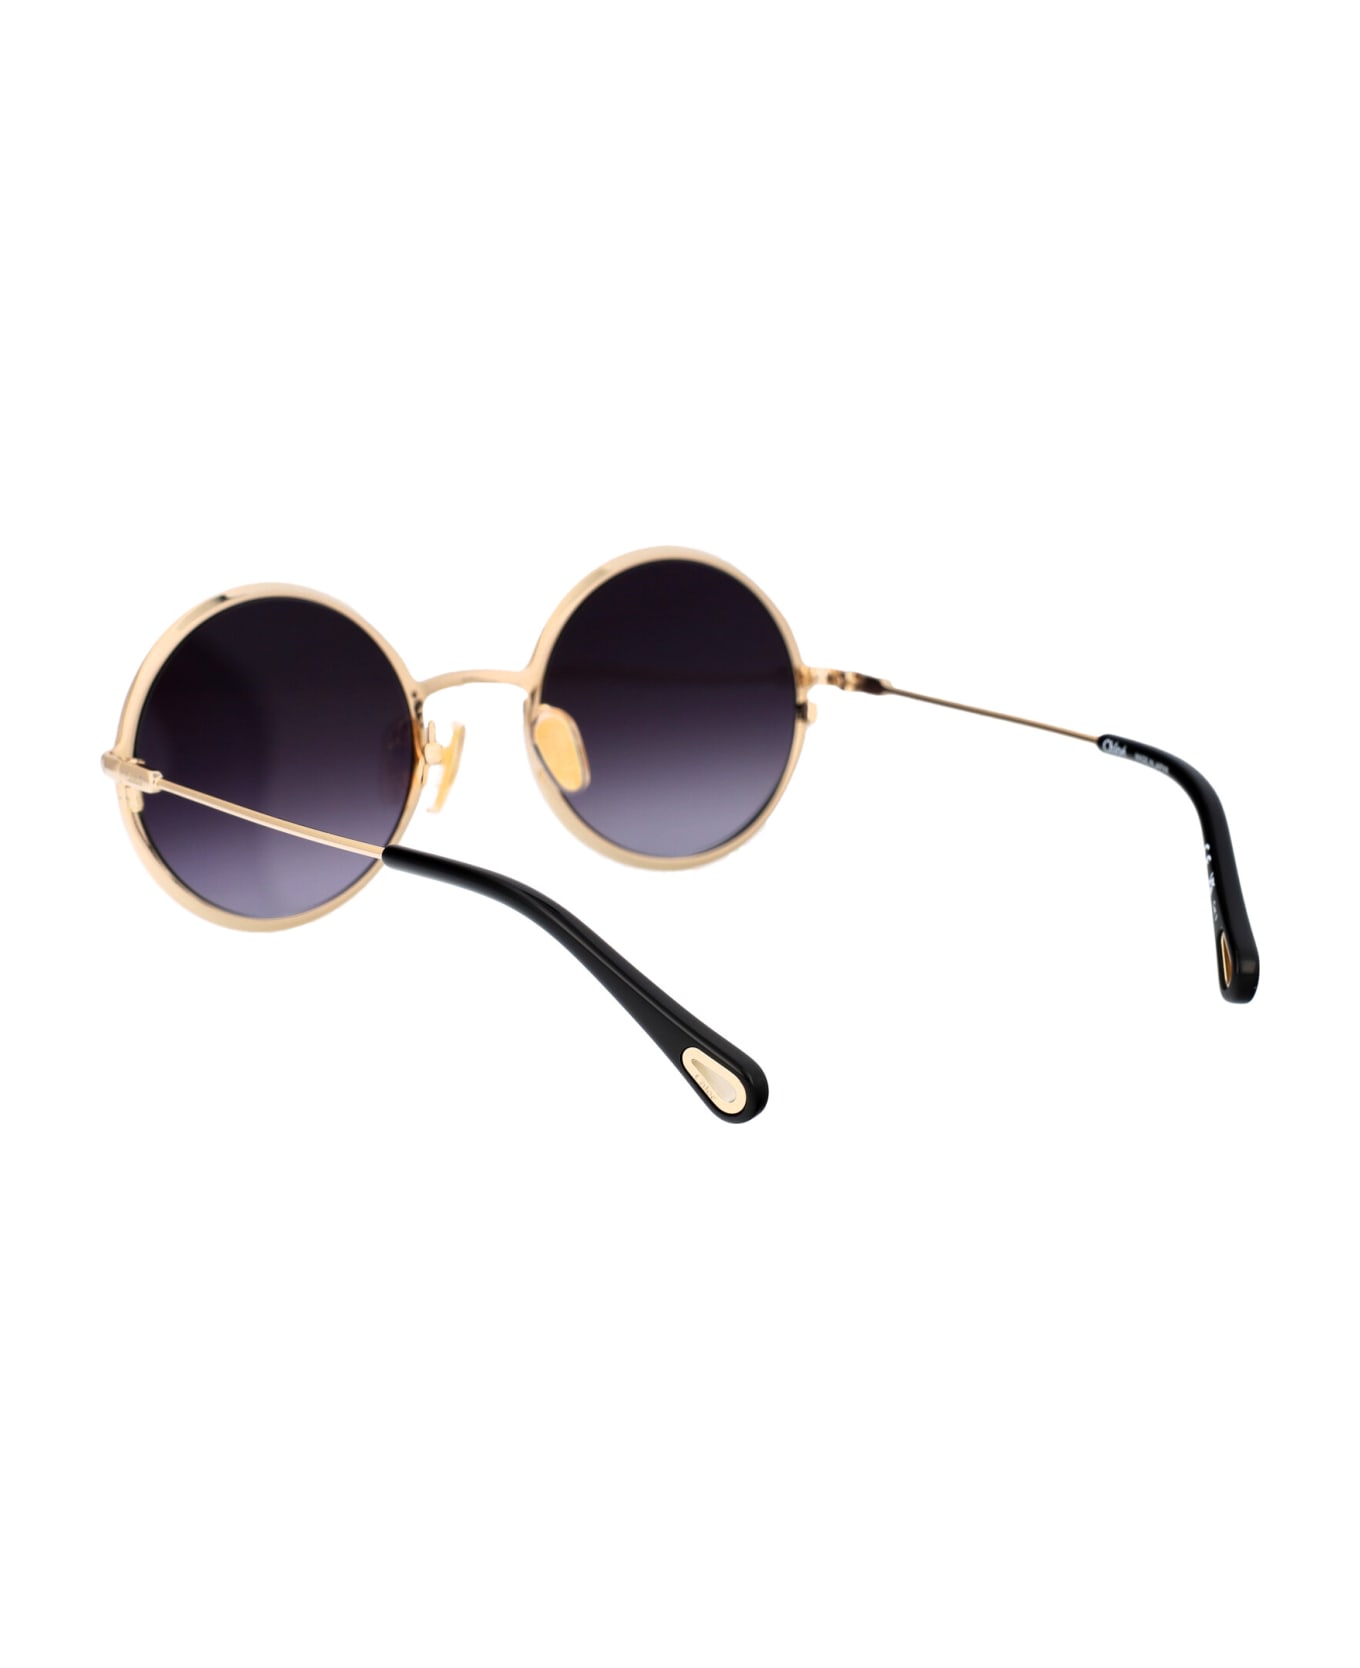 Chloé Eyewear Ch0230s Sunglasses - 001 GOLD GOLD GREY